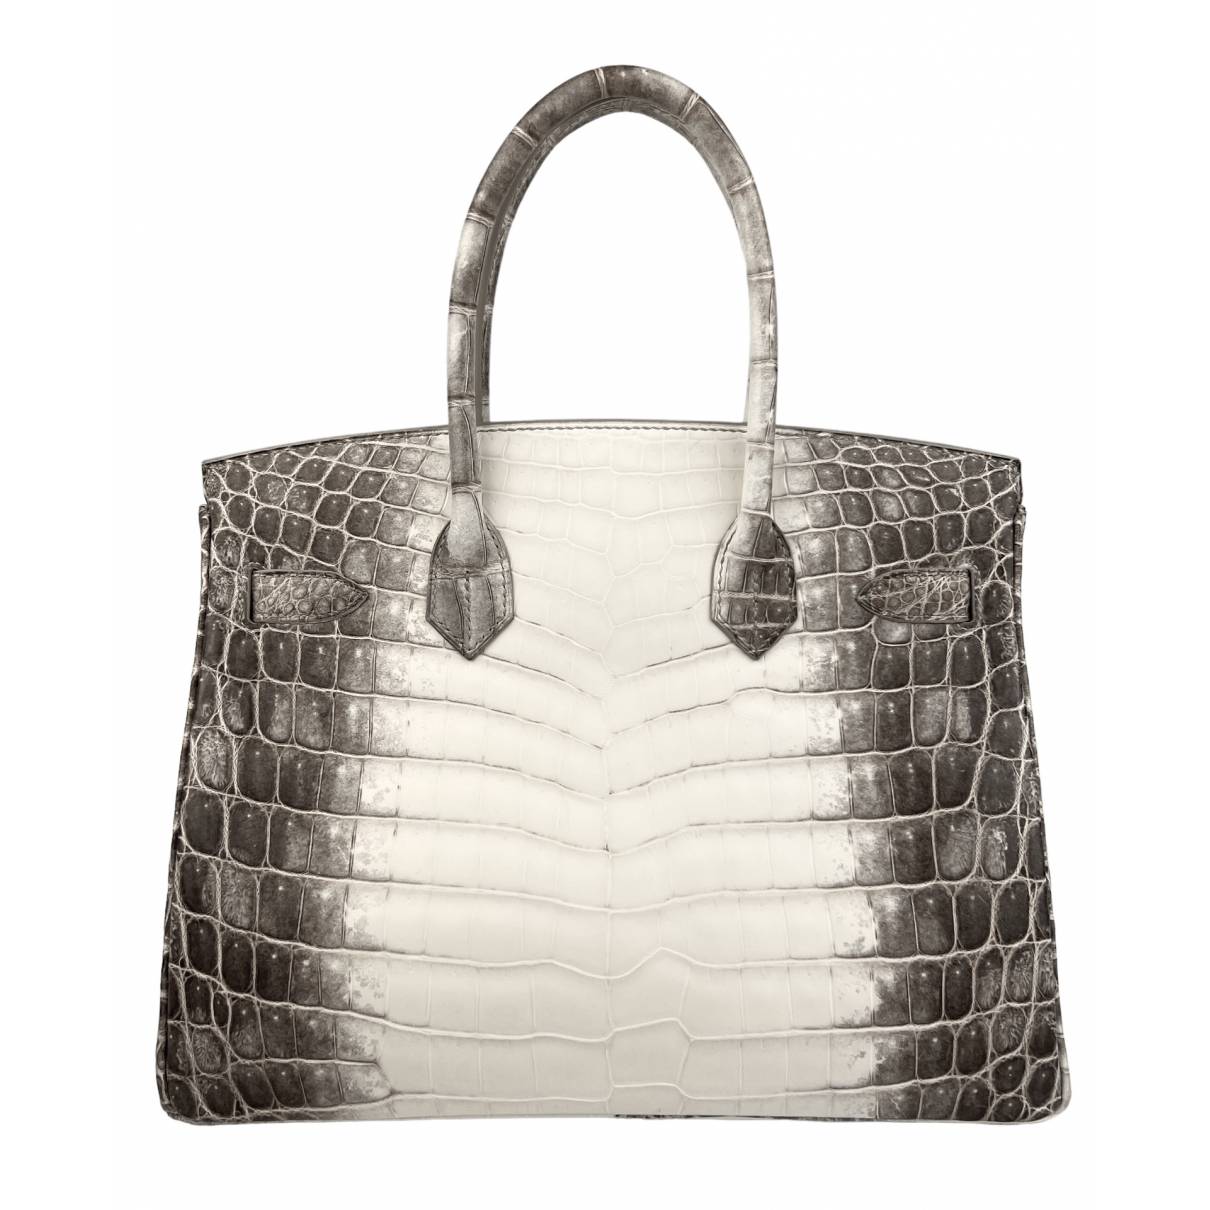 Hermes birkin crocodile womens bag